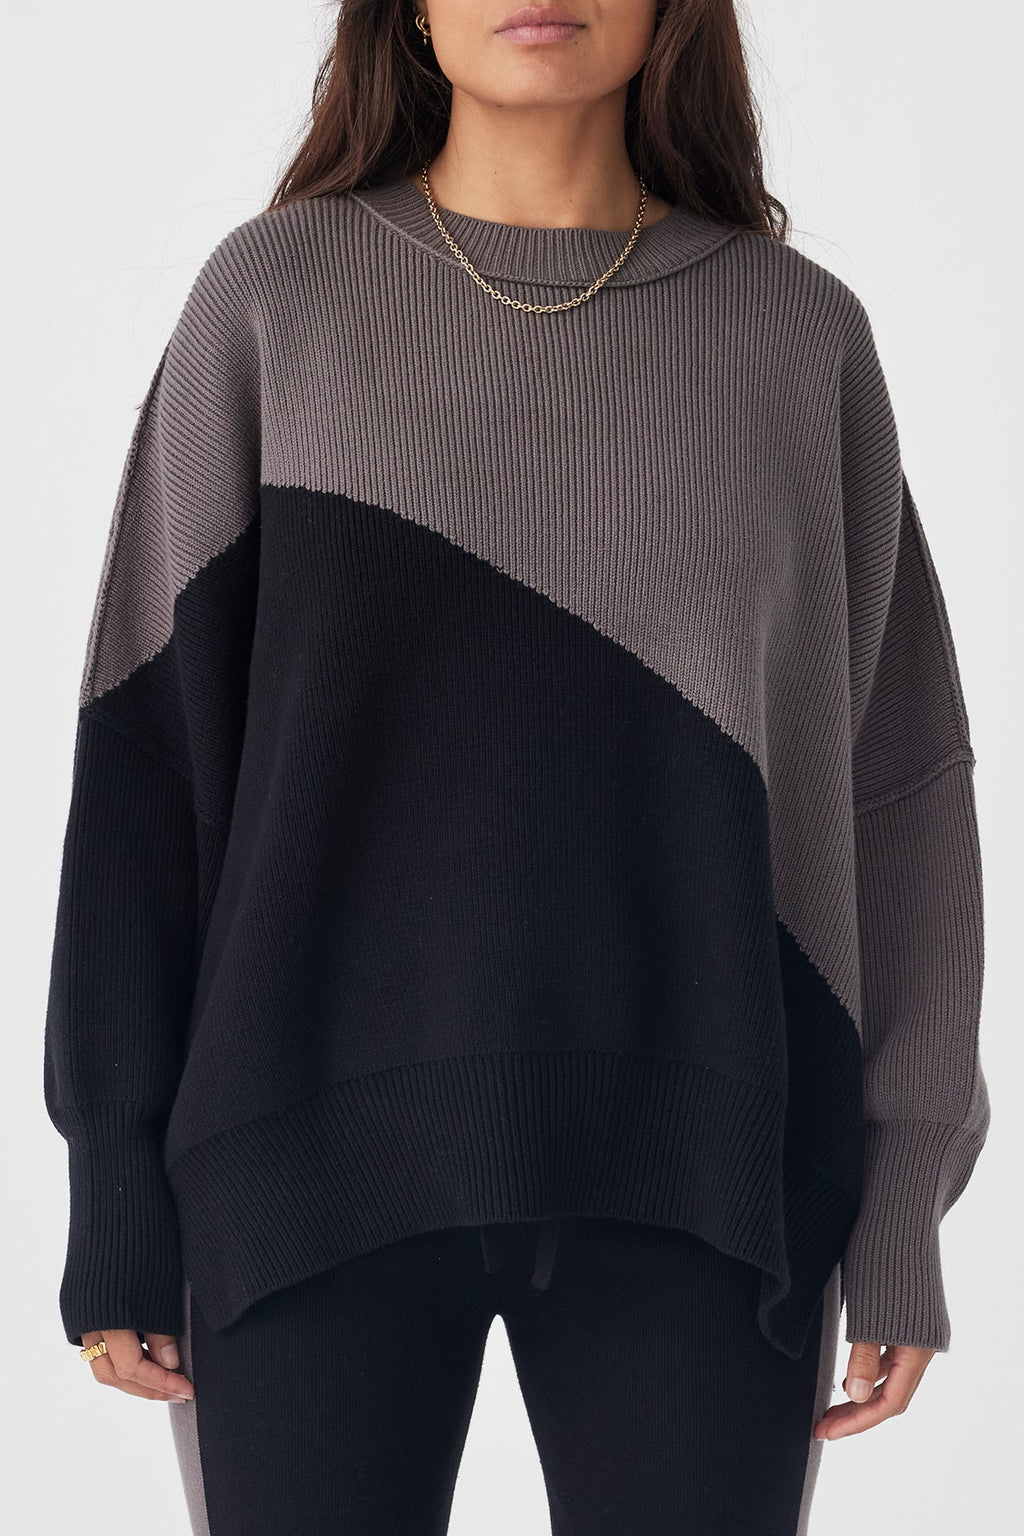 arcaa movement - neo sweater - black & grey